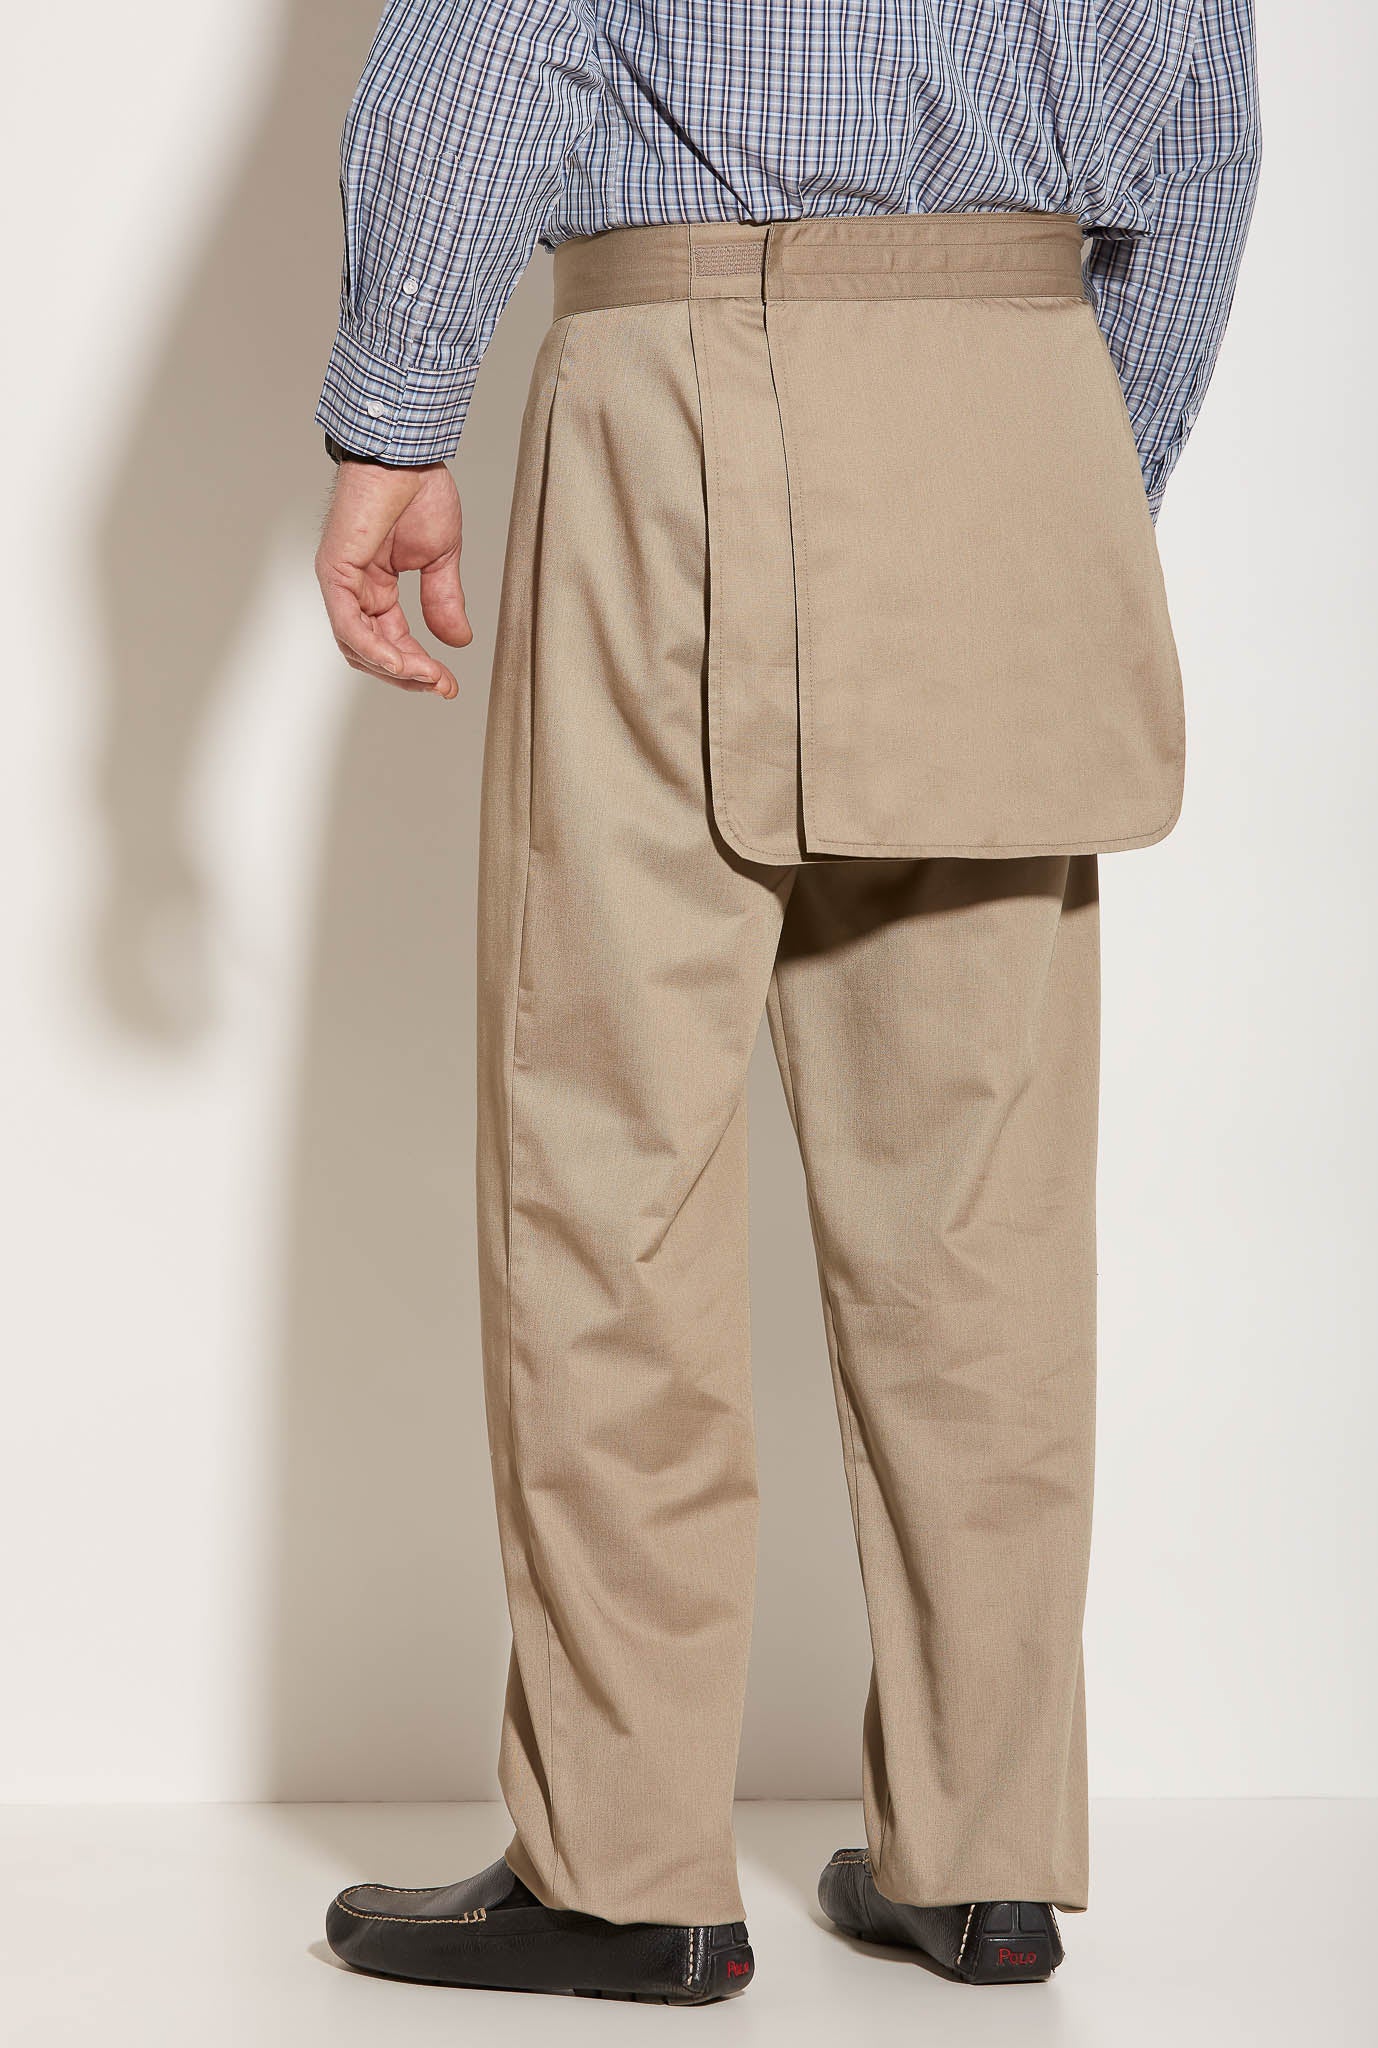 Pantalon Chino pour Hommes - Khaki | Timmy | Vêtements Adaptés